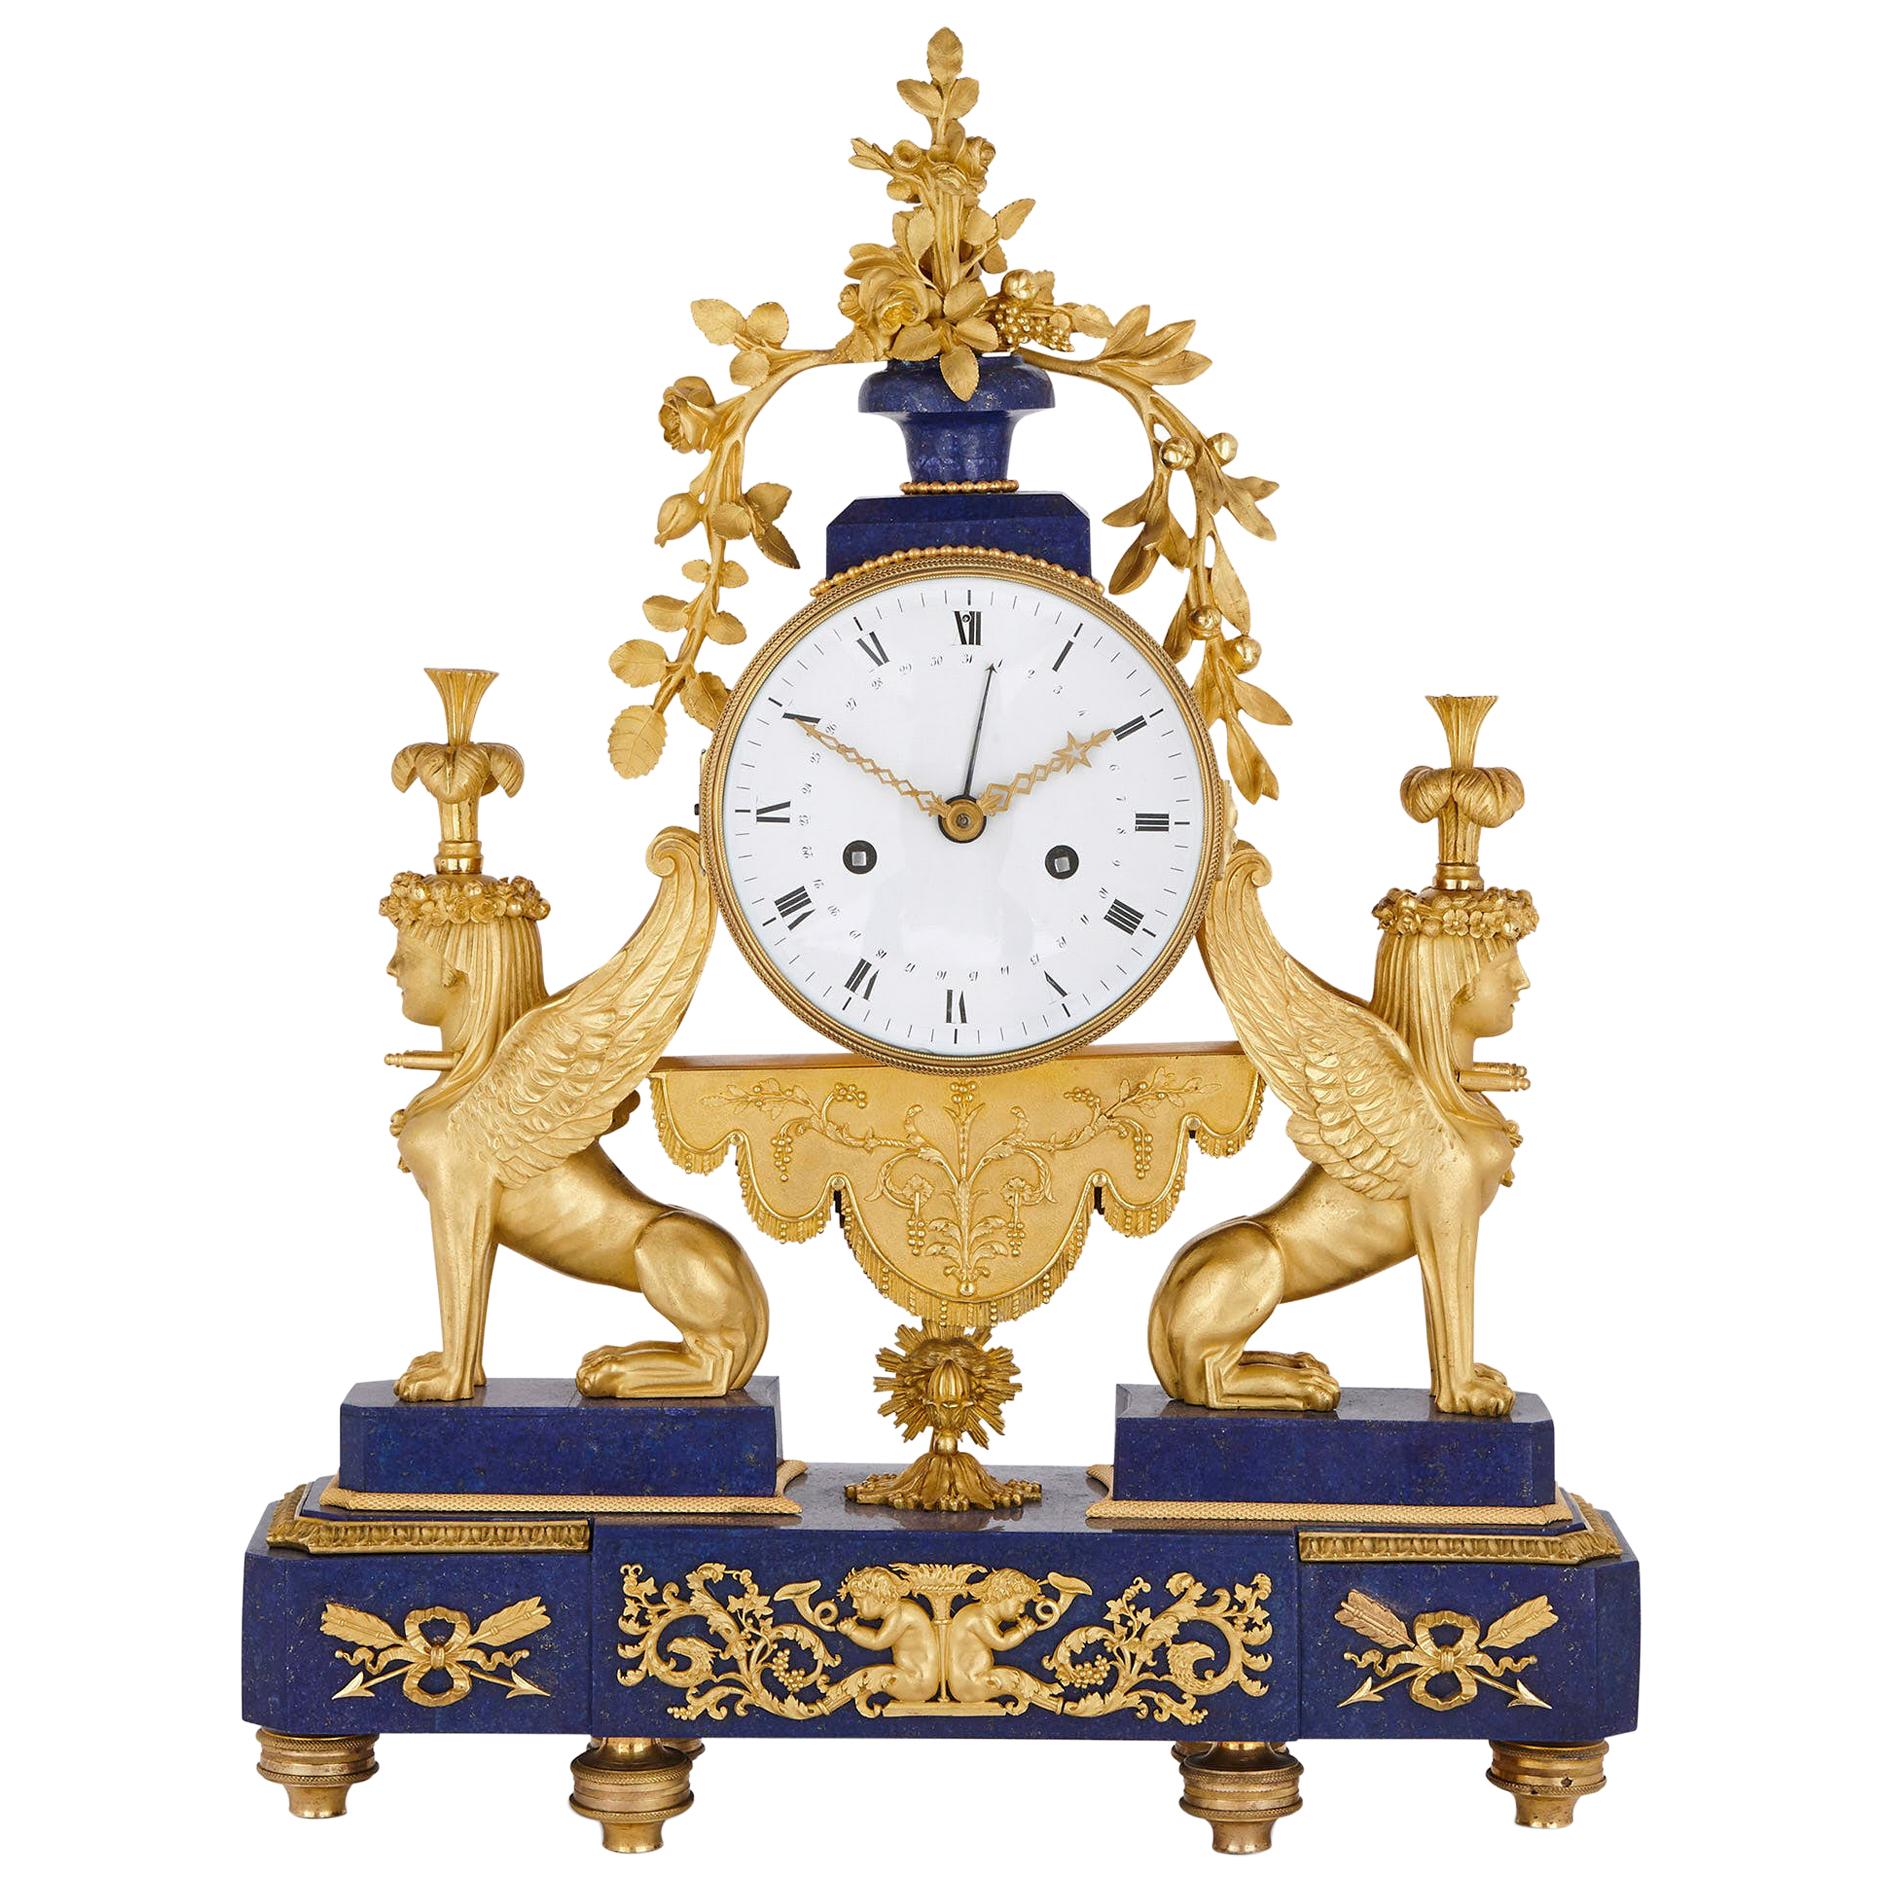 Gilt Bronze and Lapis French Empire Period Mantel Clock